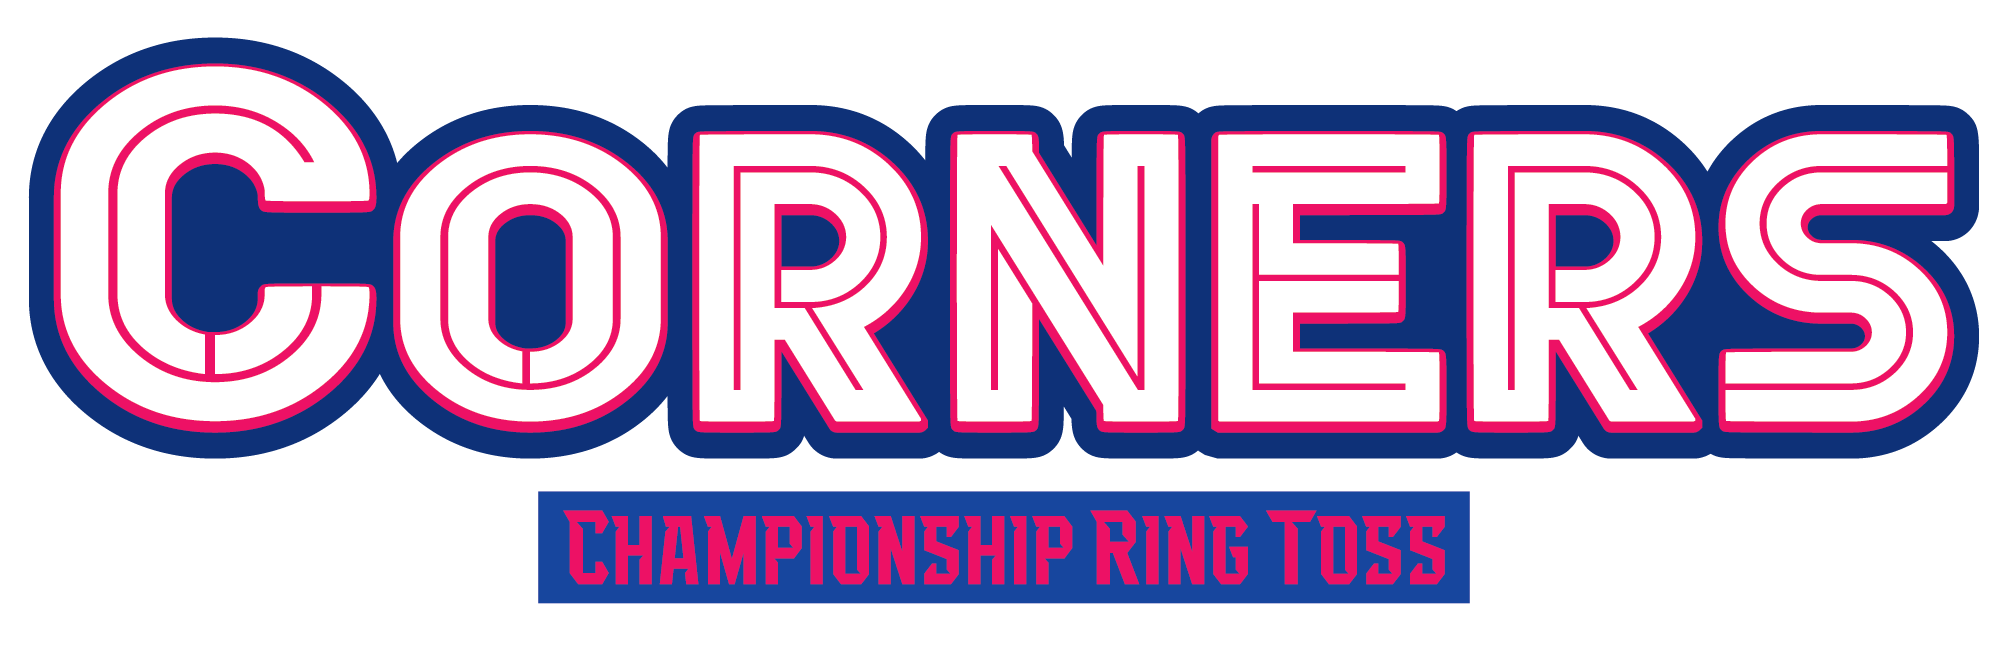 Corners Championship Ring Toss